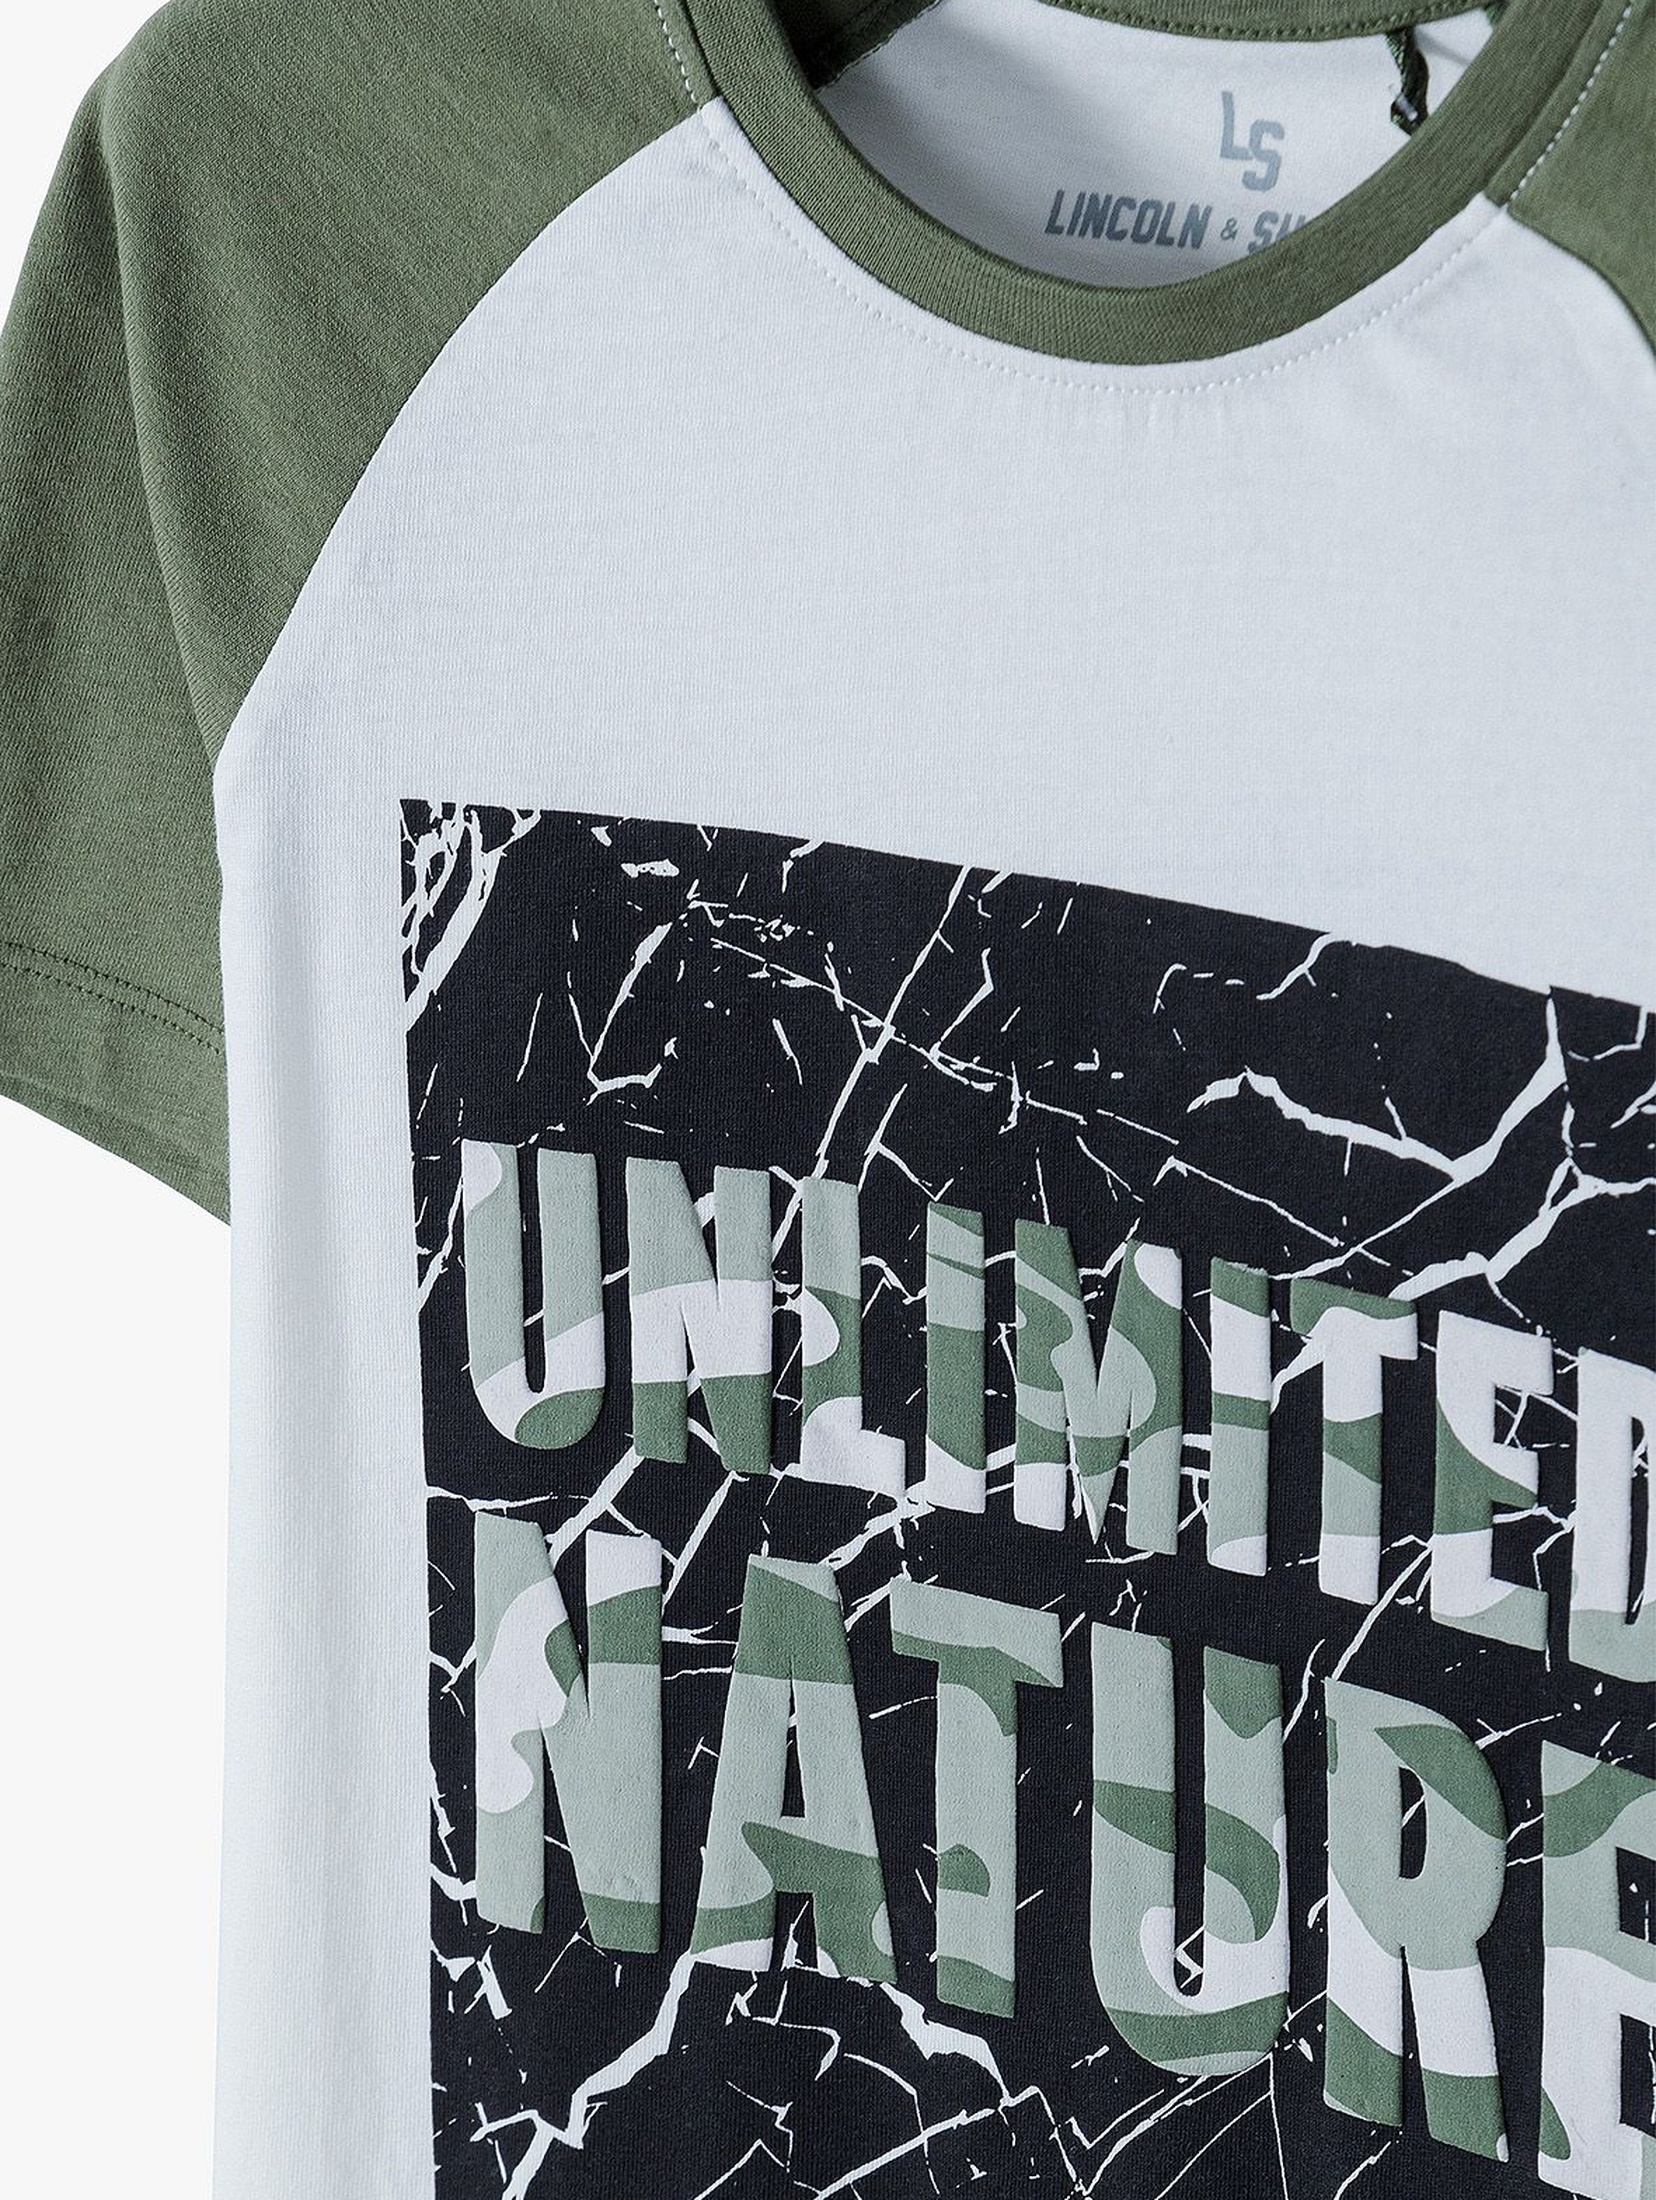 Bawełniany t-shirt chłopięcy - Unlimited Nature